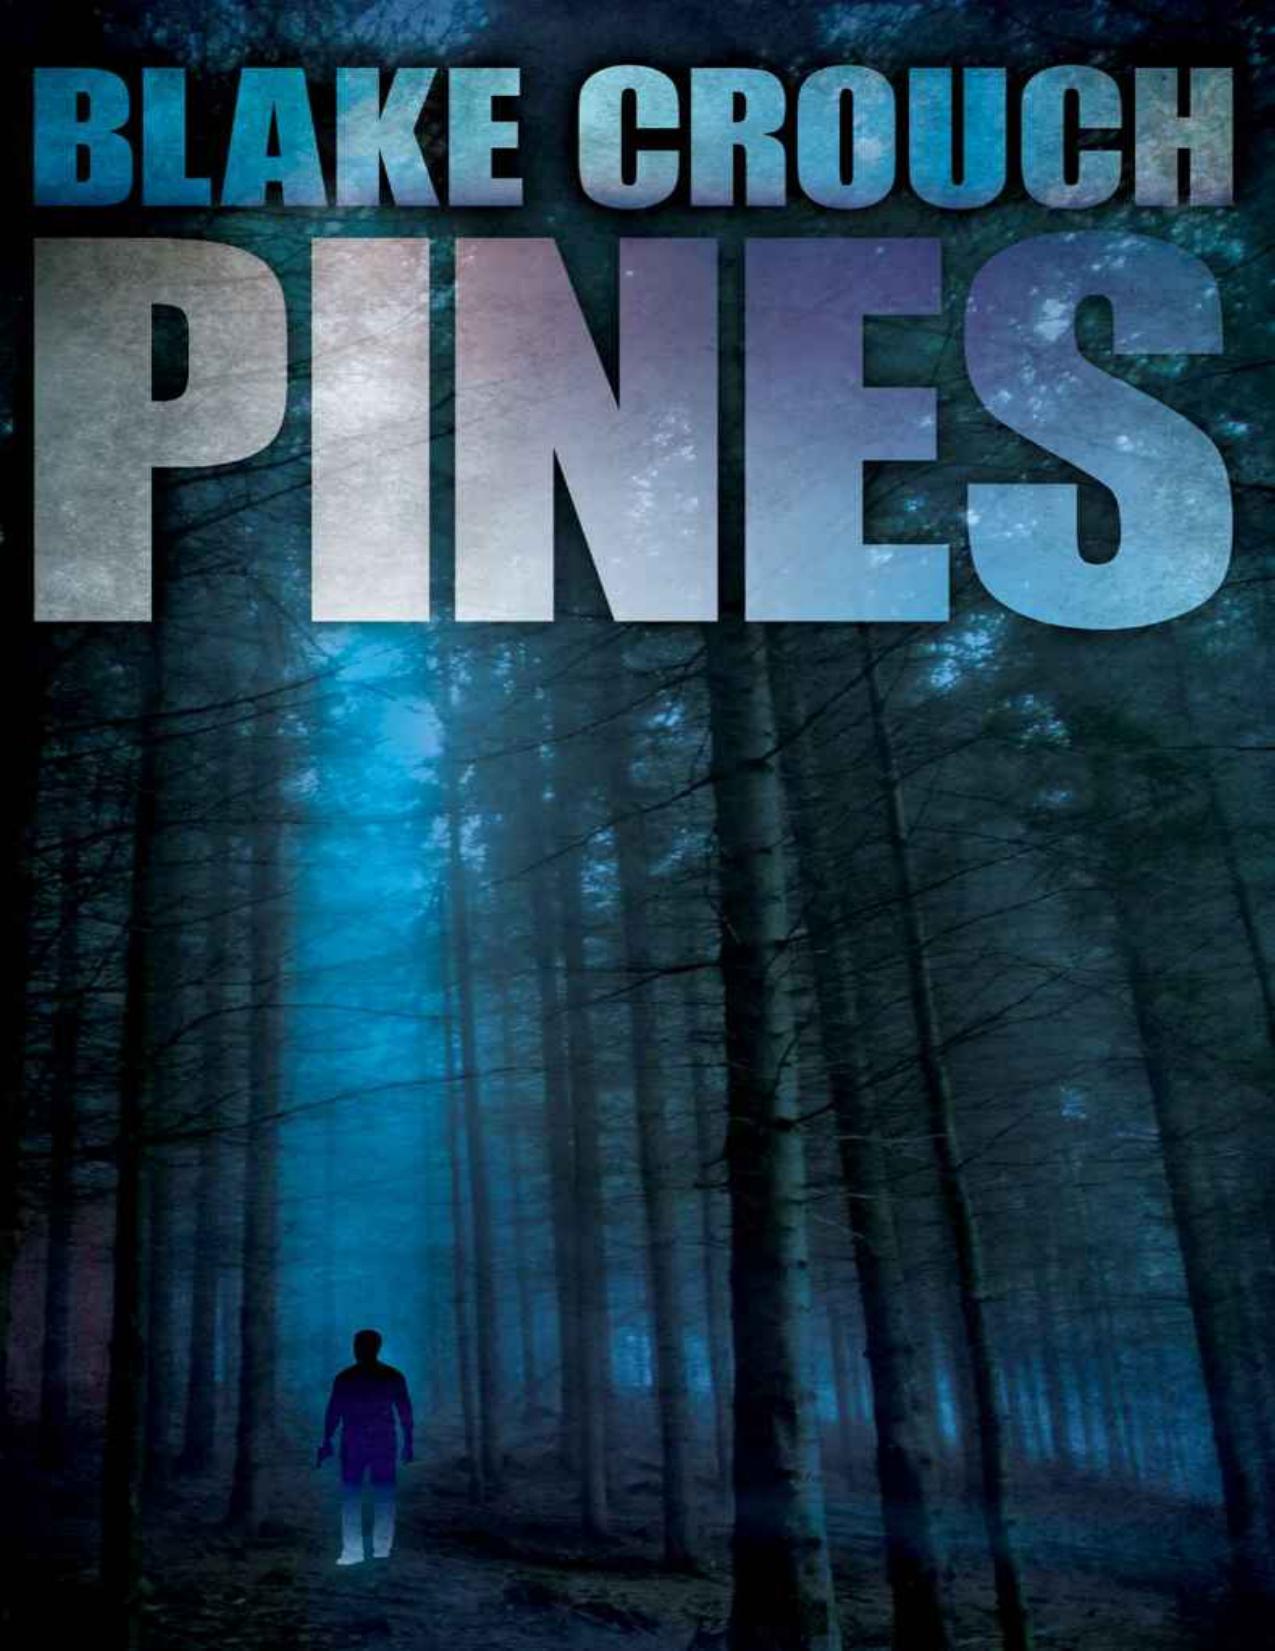 Pines